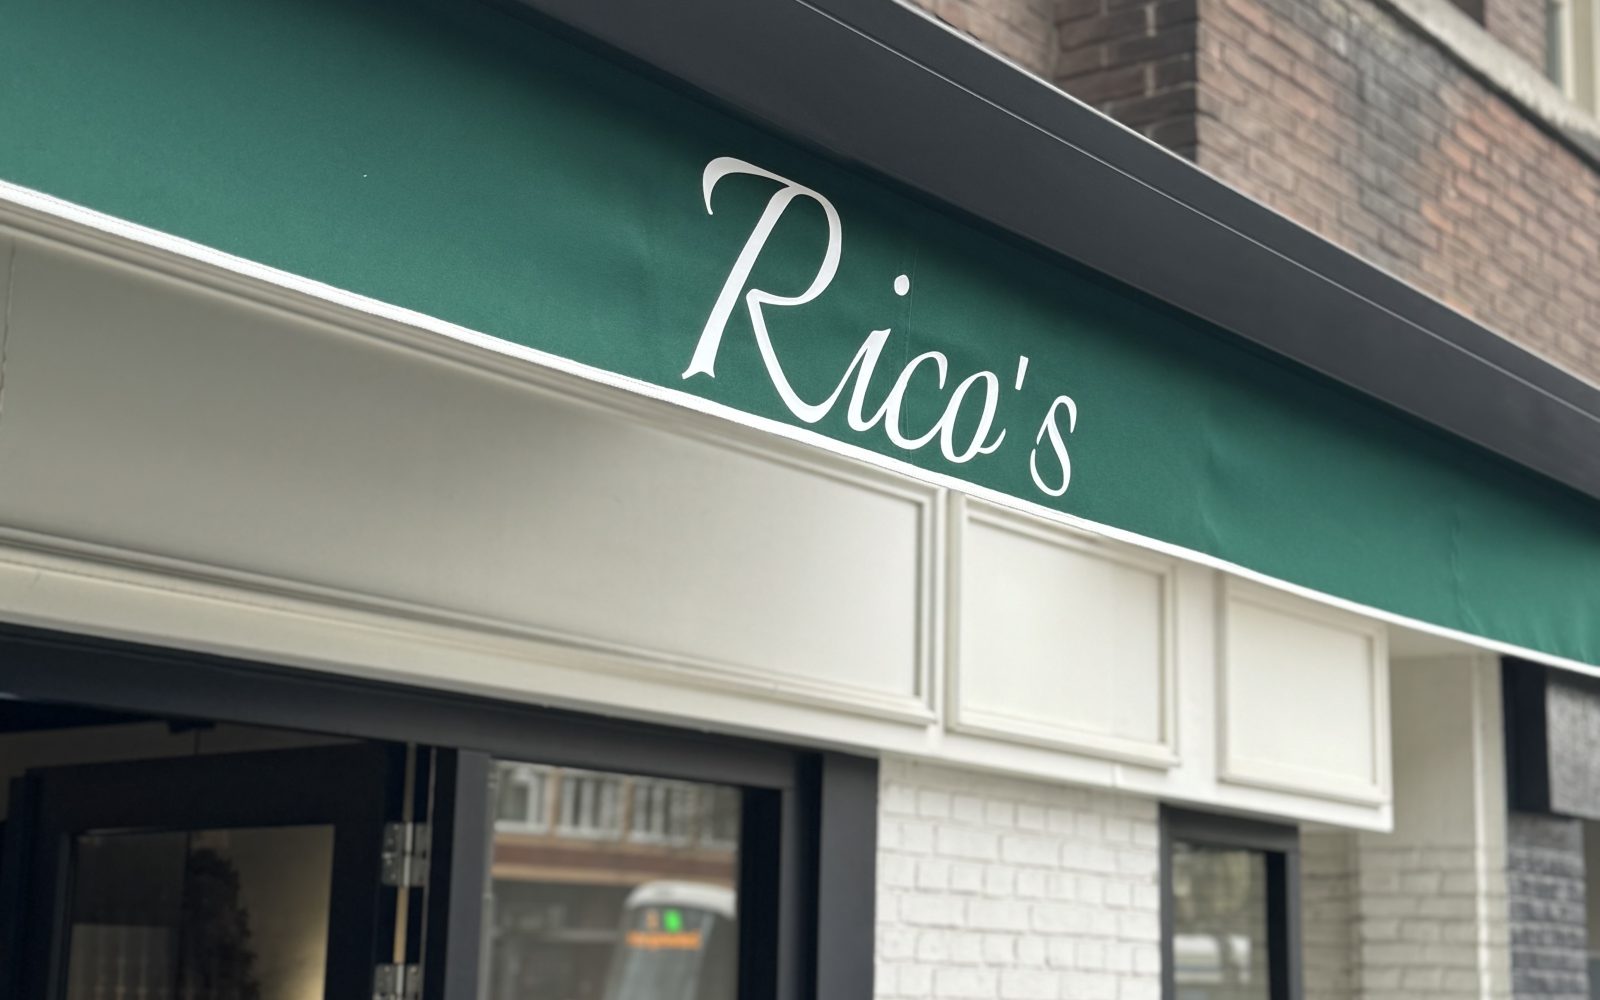 Rico’s